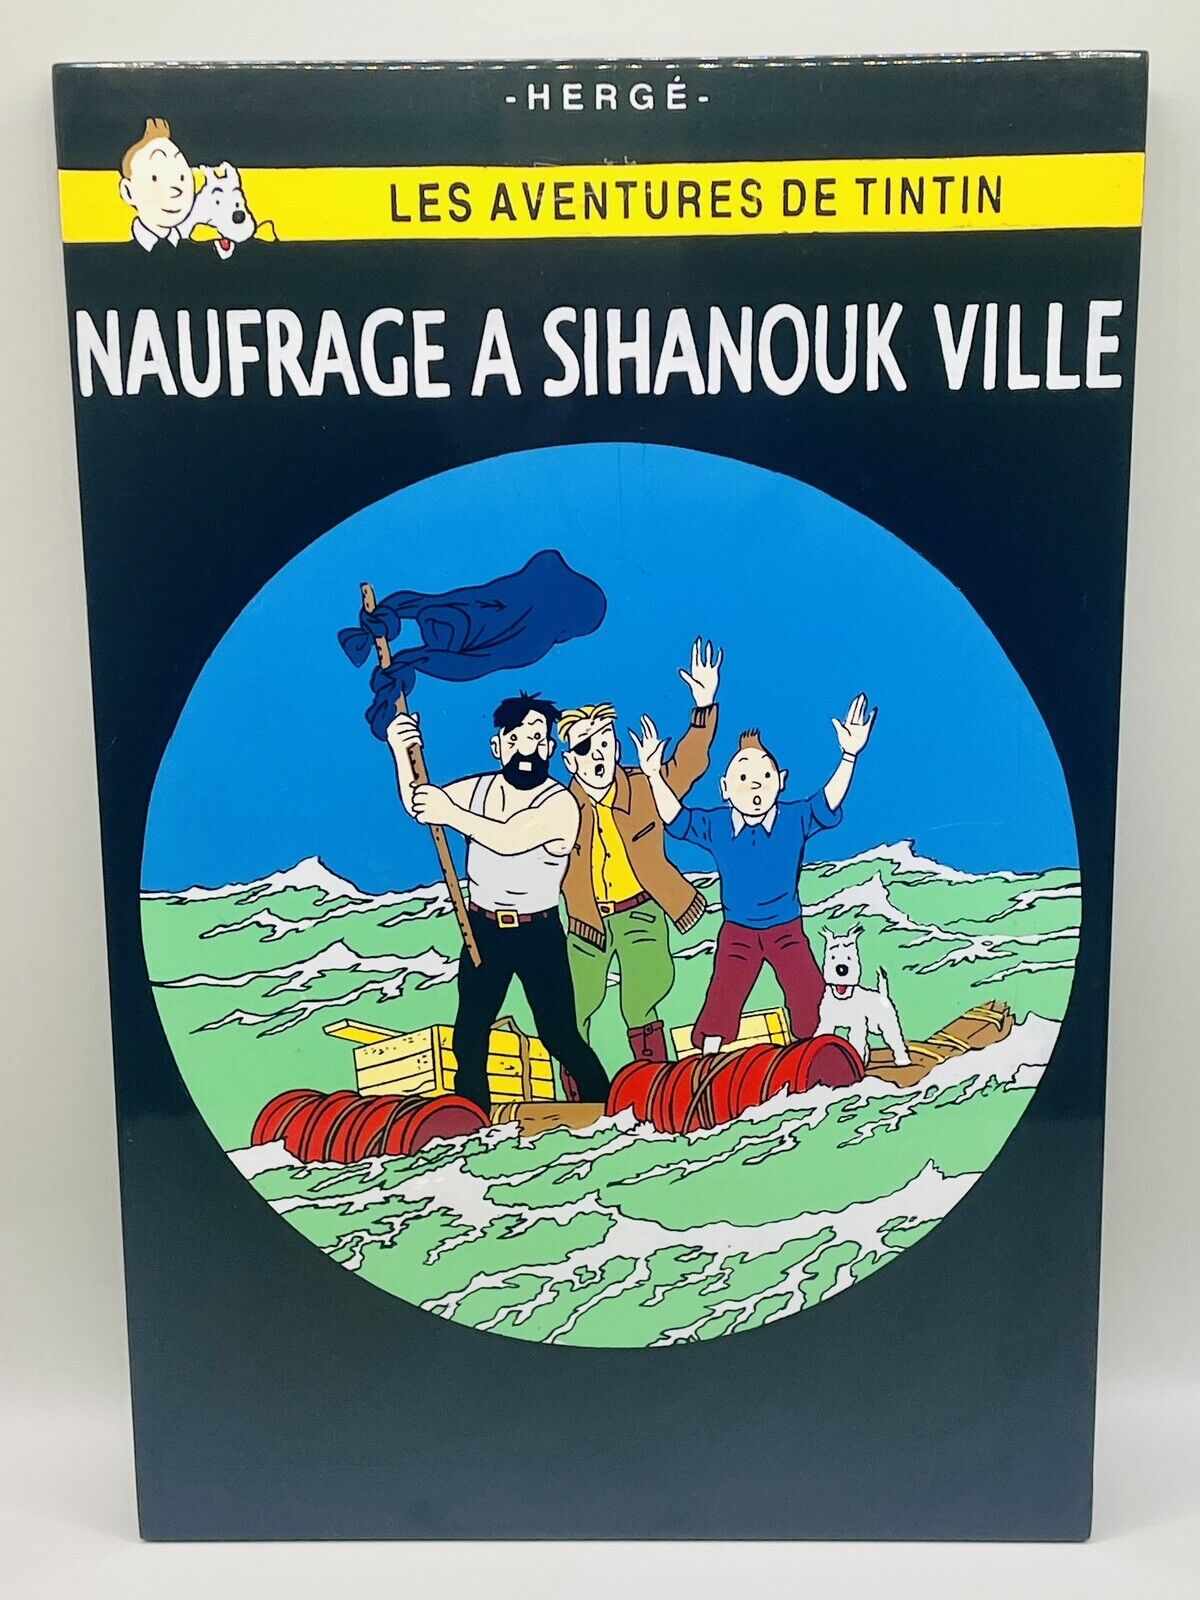 Lea Aventures De Tintin Naufrage A Sihanouk Ville by Herge Wall Hanging